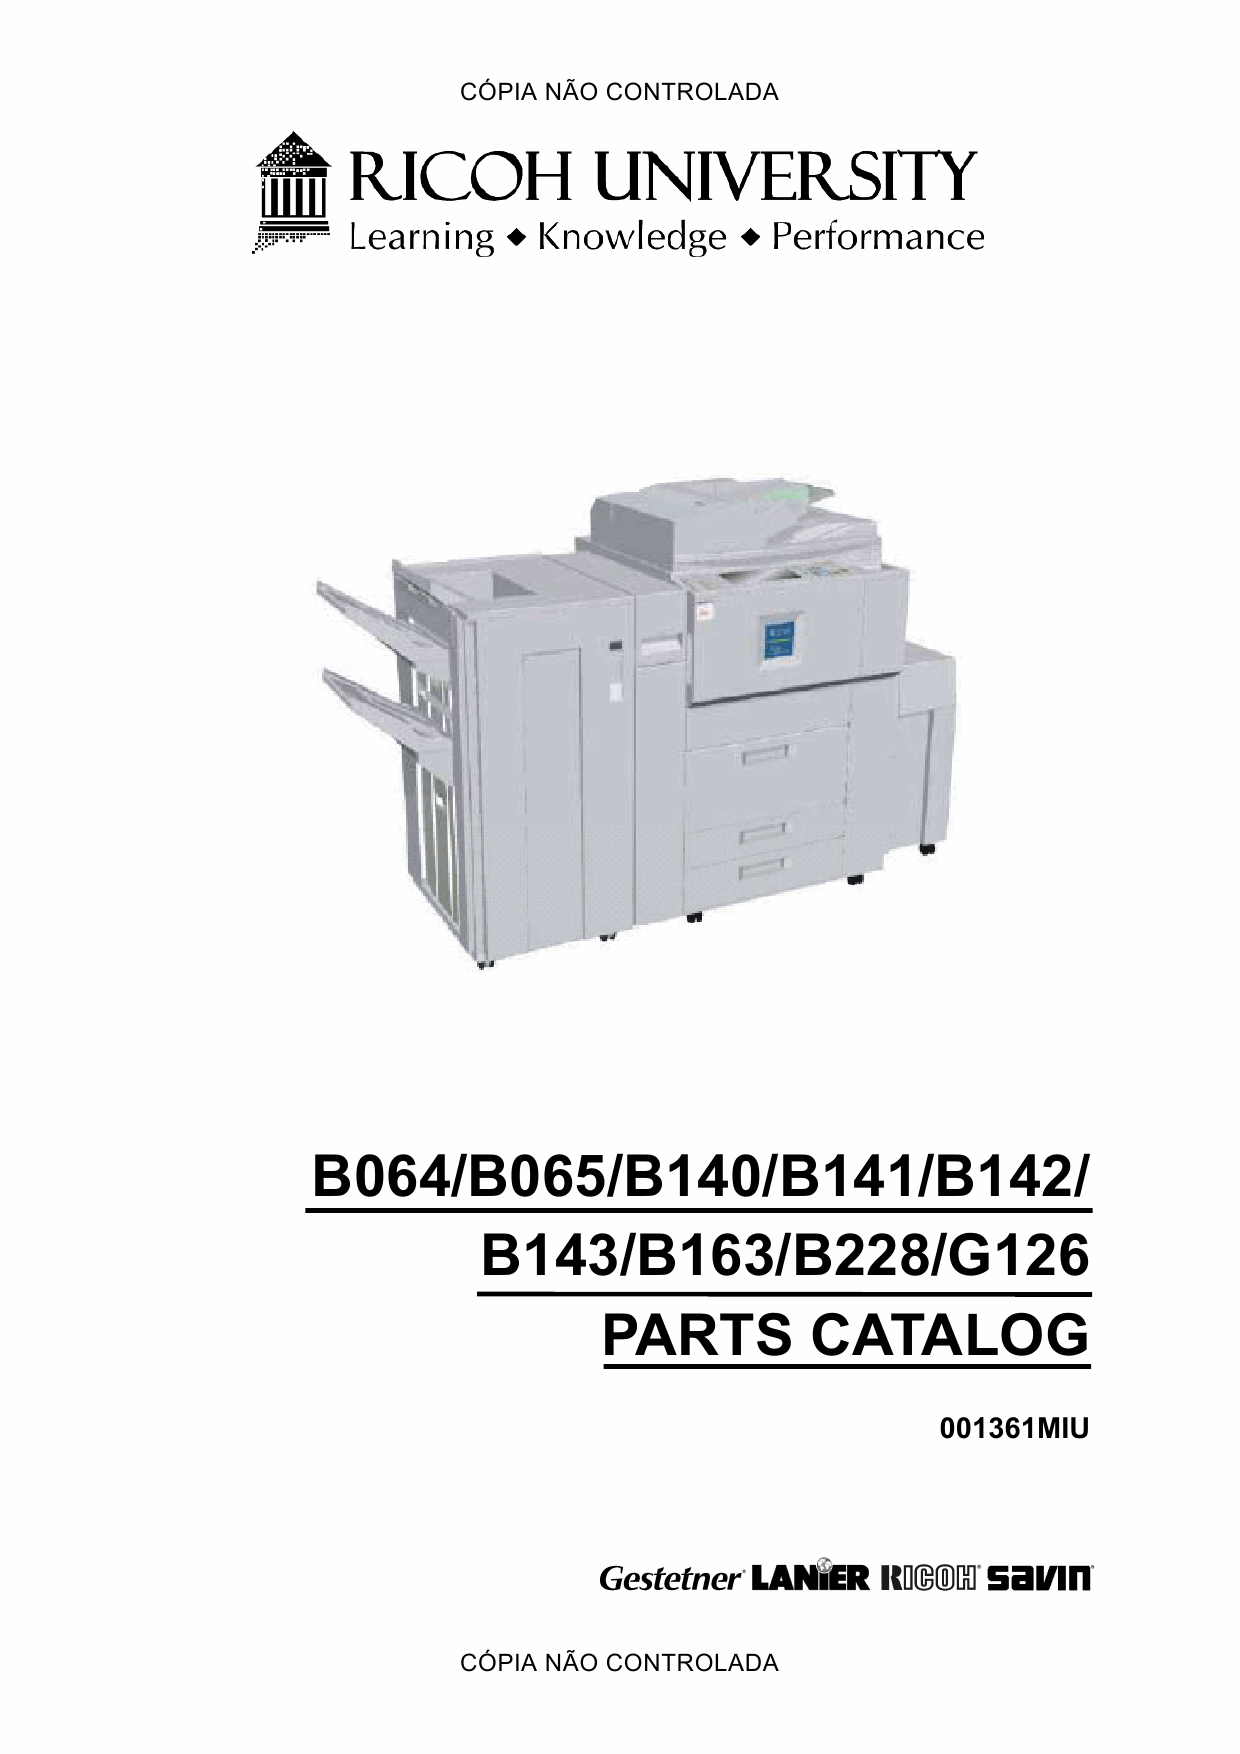 RICOH Aficio AP-900 G126 Parts Catalog-1